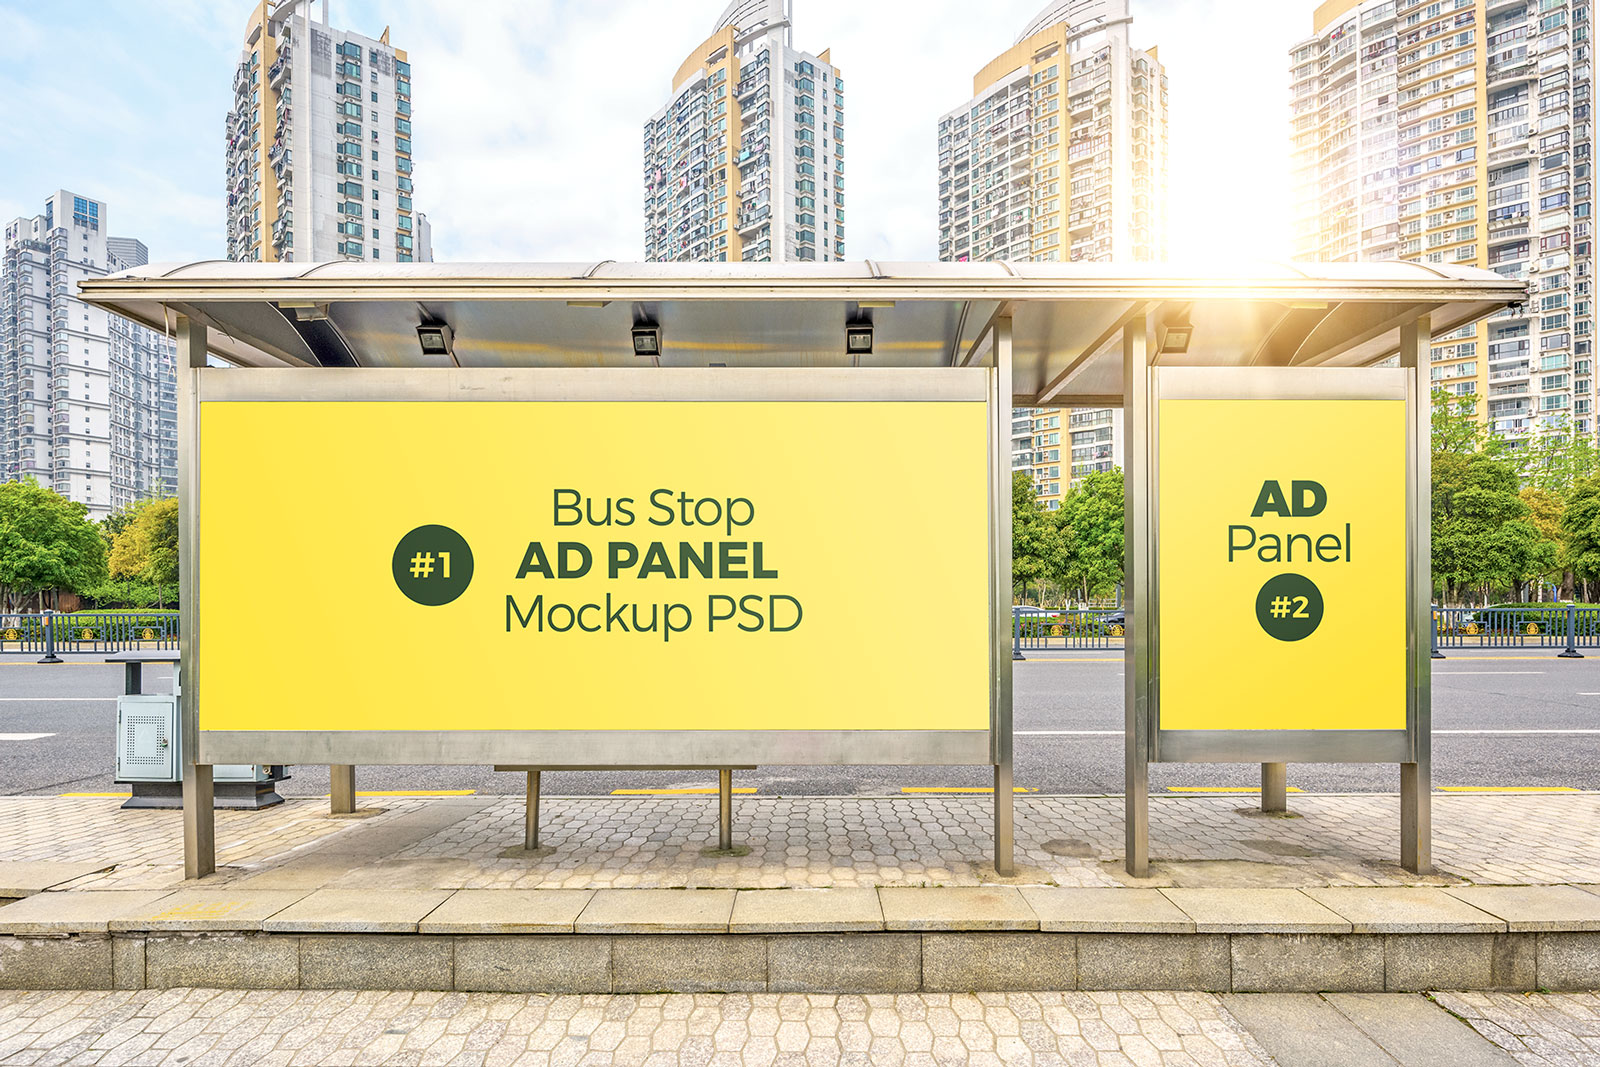 Bus Stop Shelter Advertising Panels Mockup